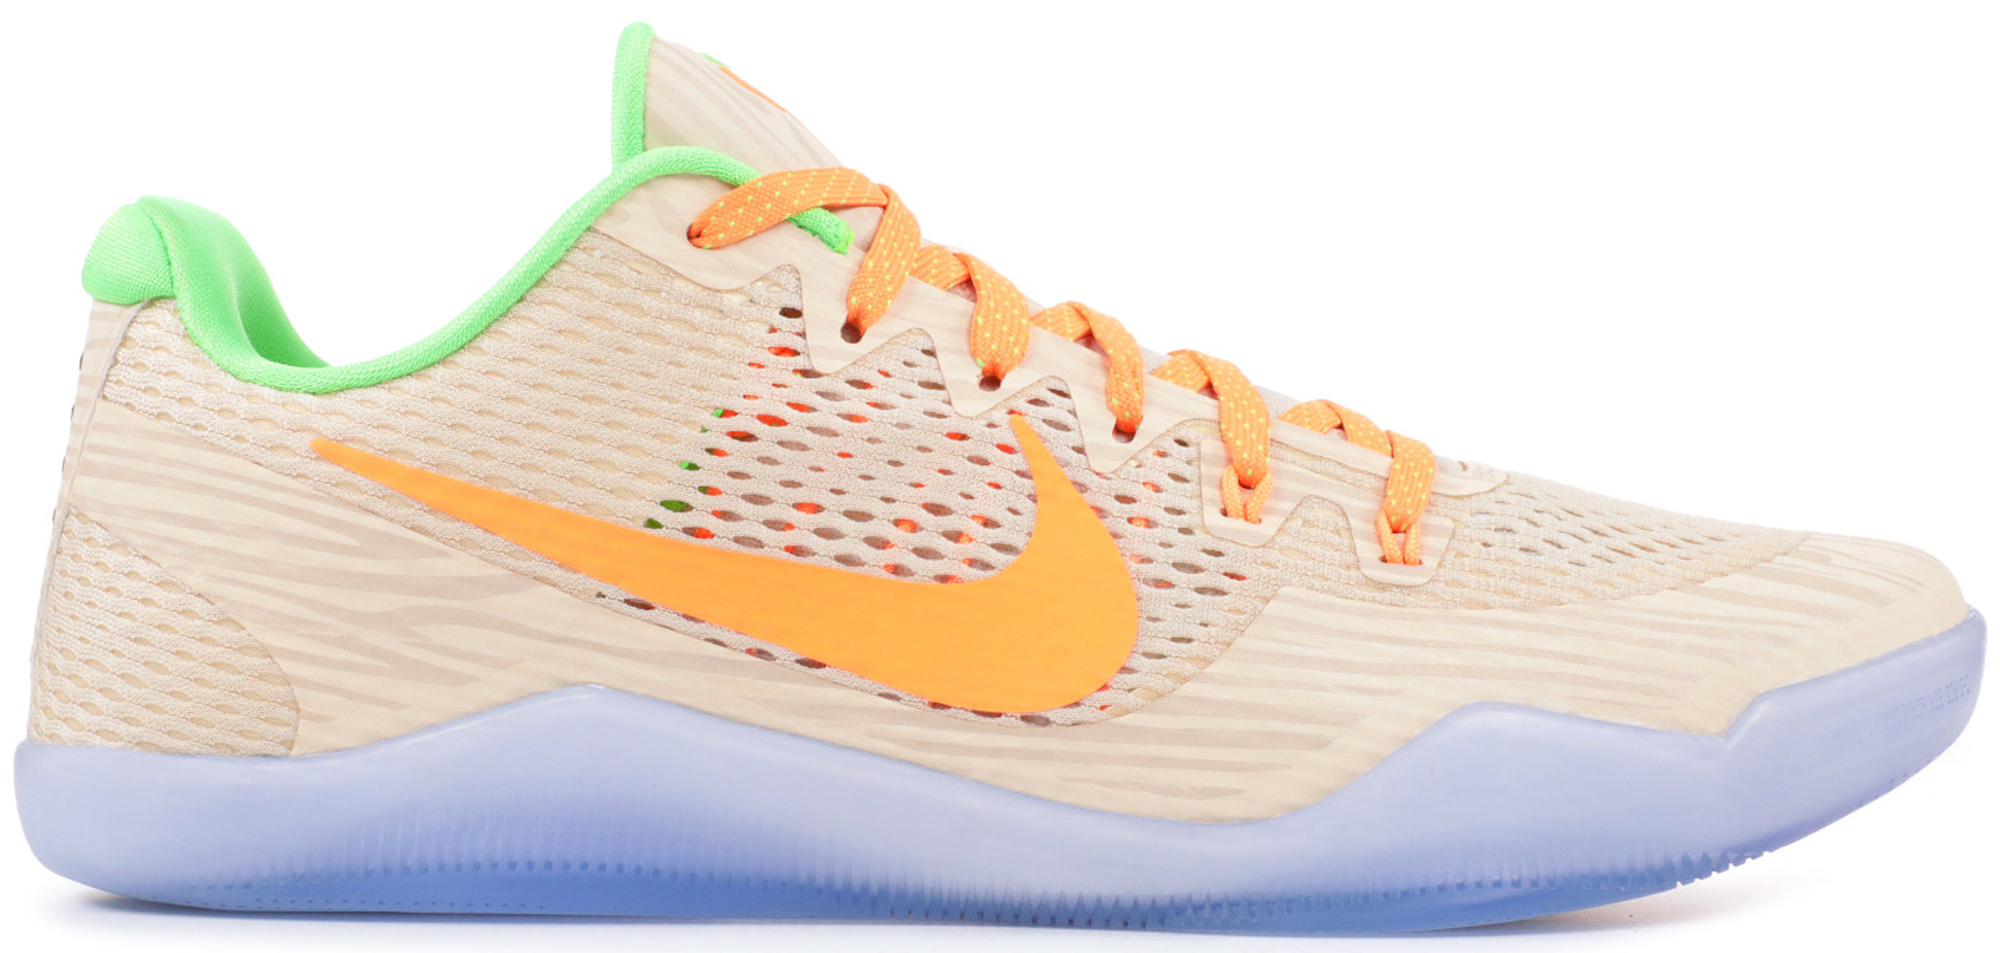 Nike Kobe 11 Peach Jam PE - 856852-282